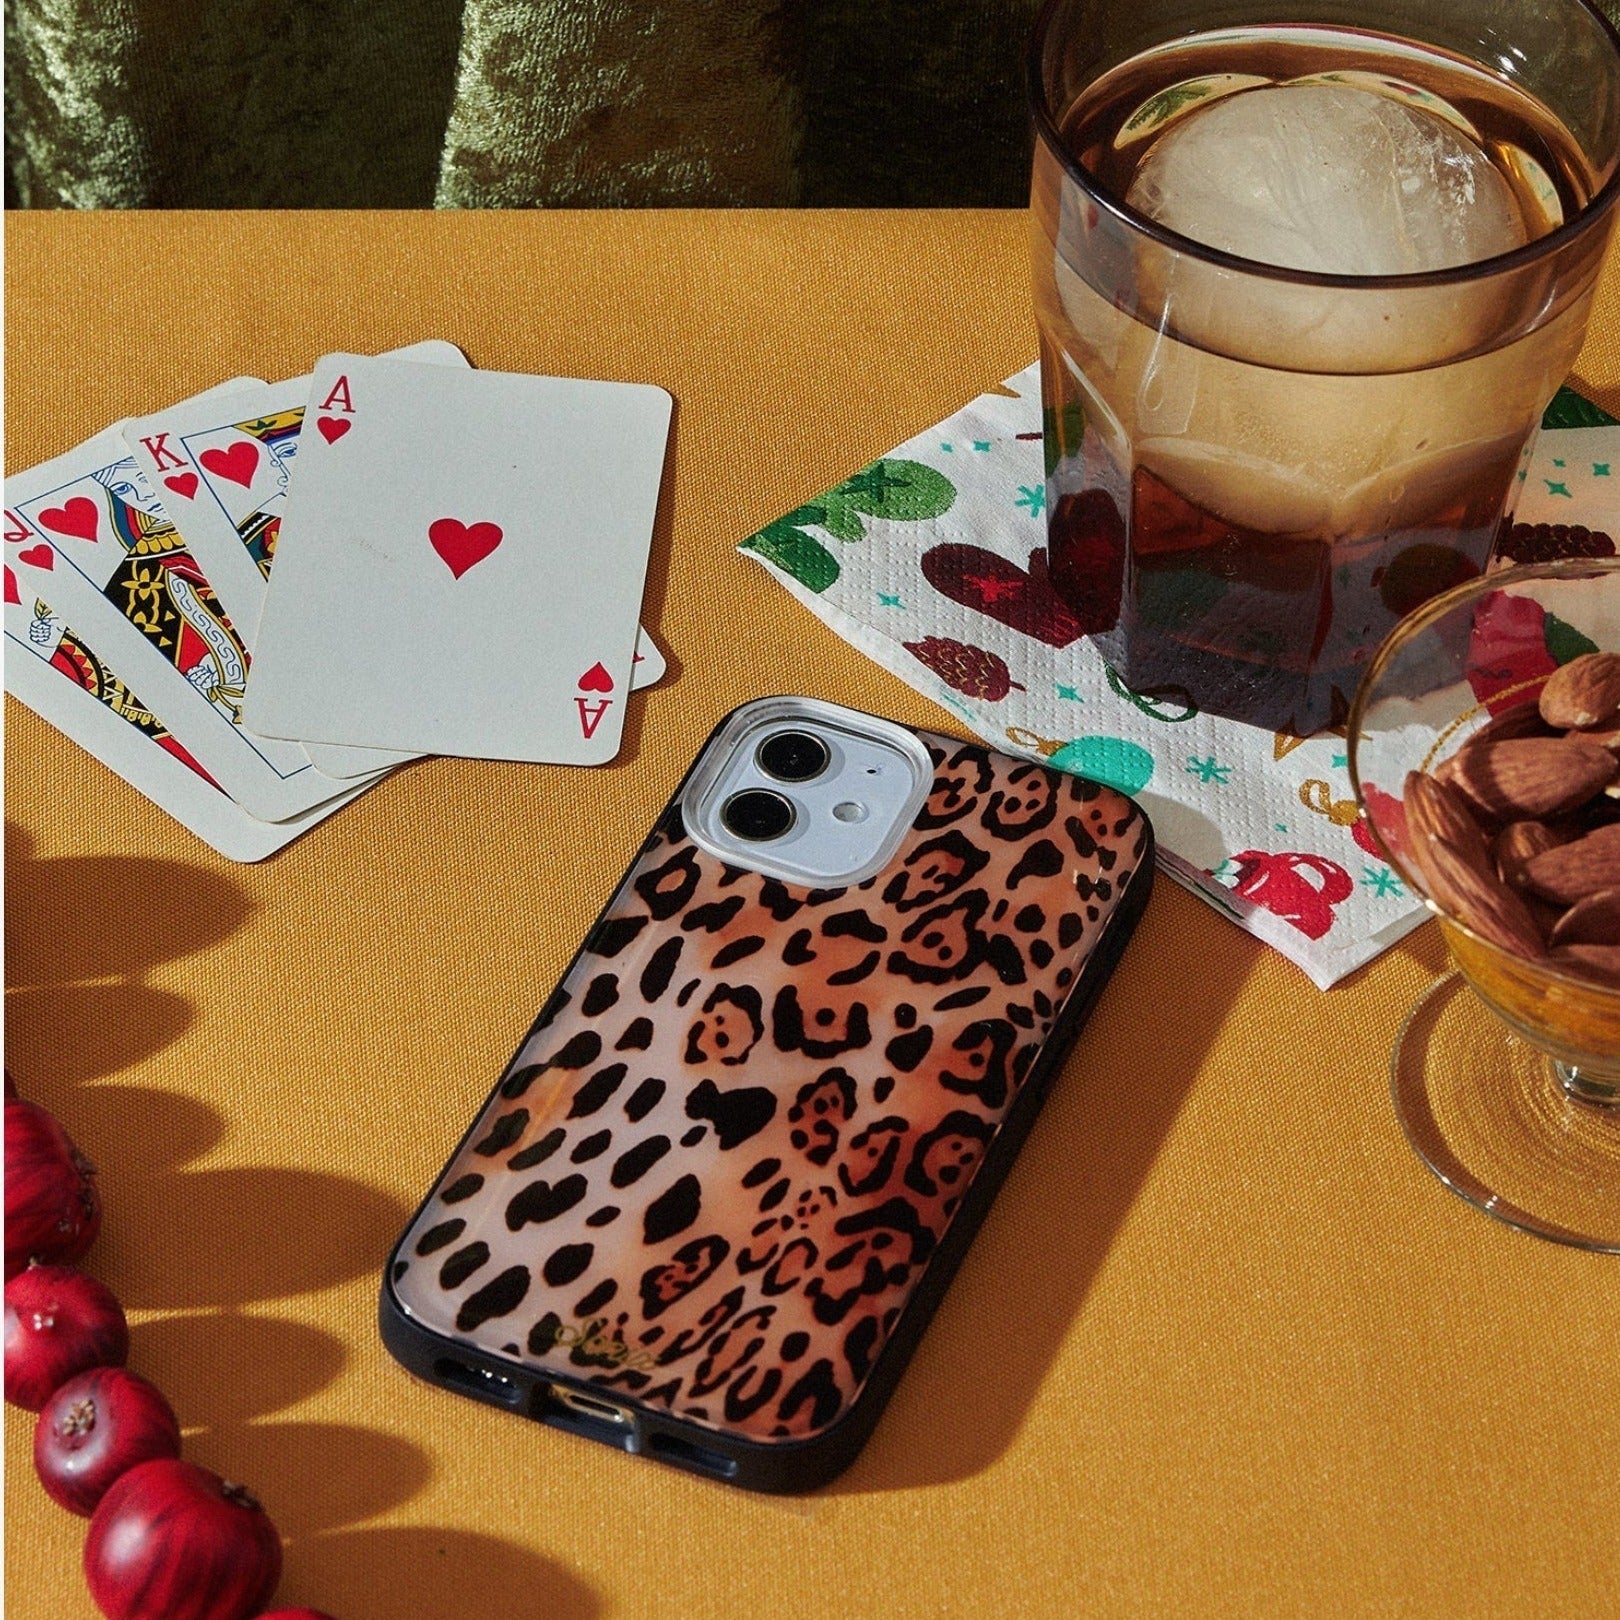 Watercolor Leopard iPhone Case